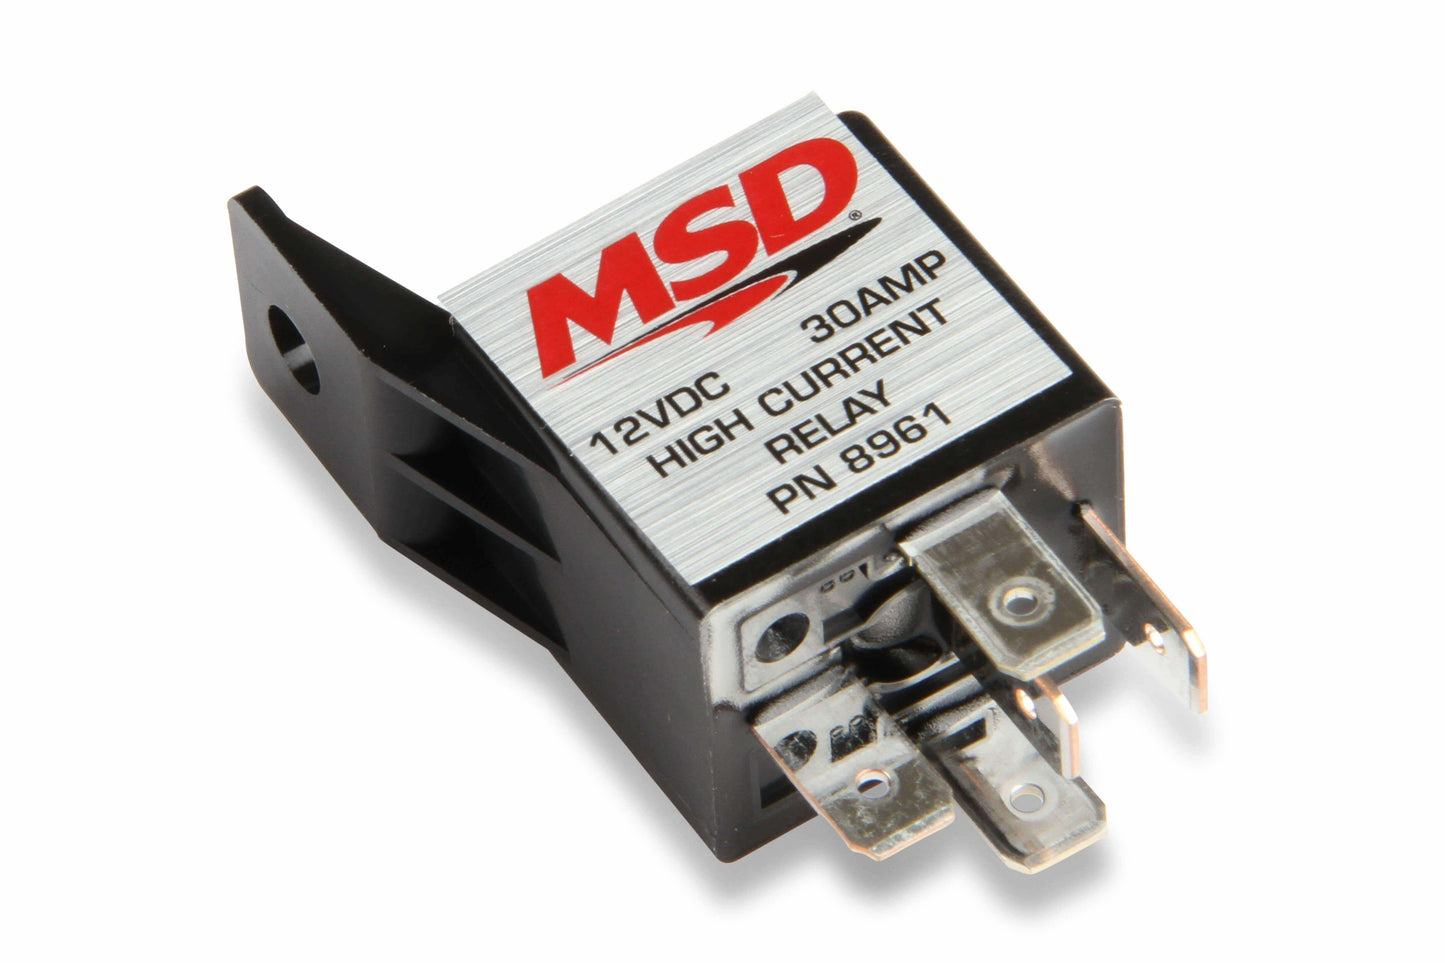 MSD Ignition 7330 7AL-3 Ignition Control